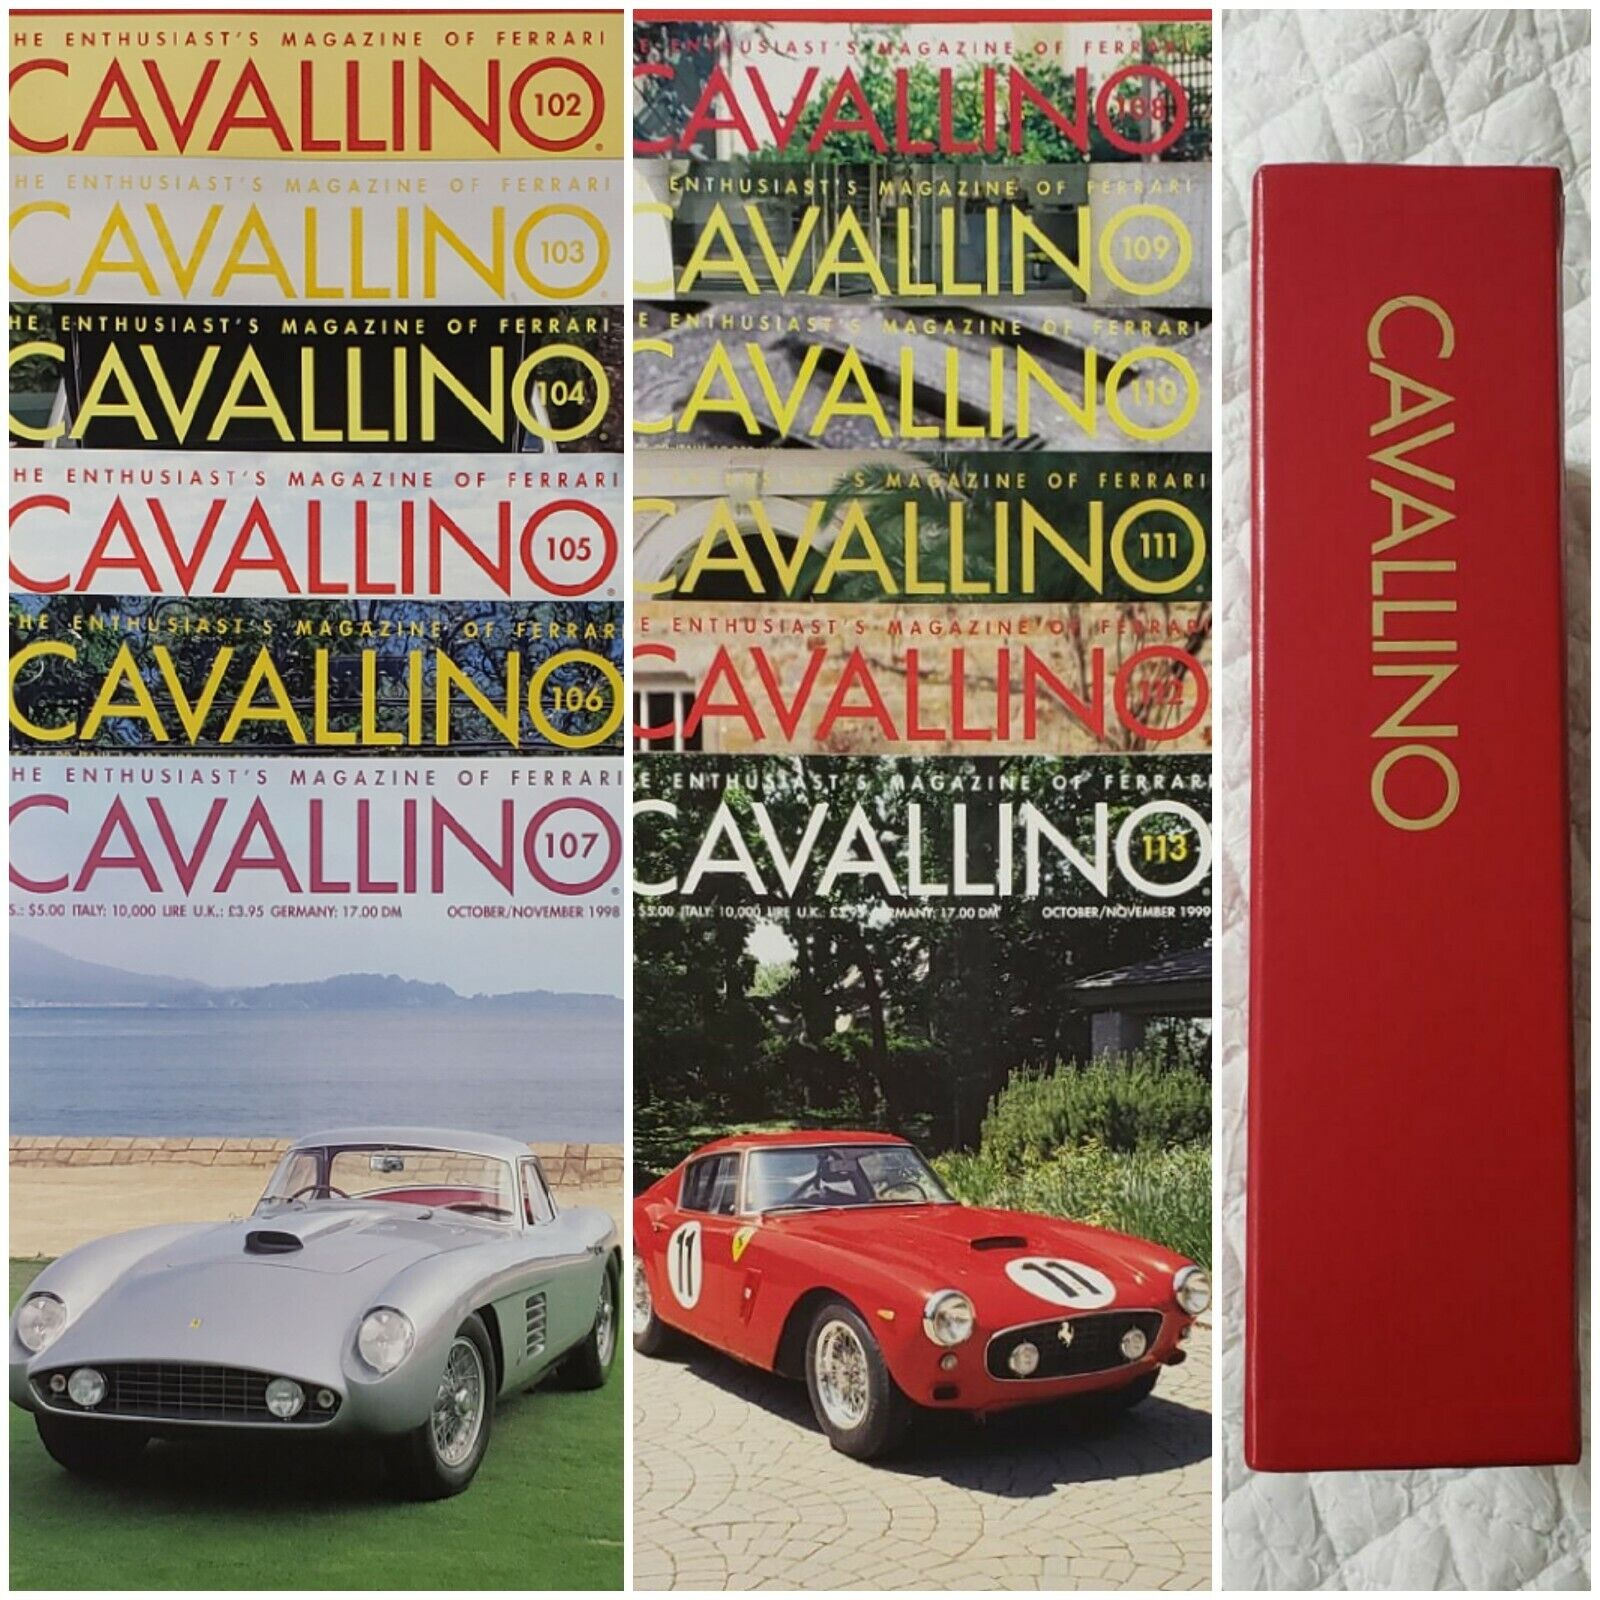 CAVALLINO Ferrari Magazine Lot #102-113 in ORIGINAL RED SLIPCASE STORAGE BOX